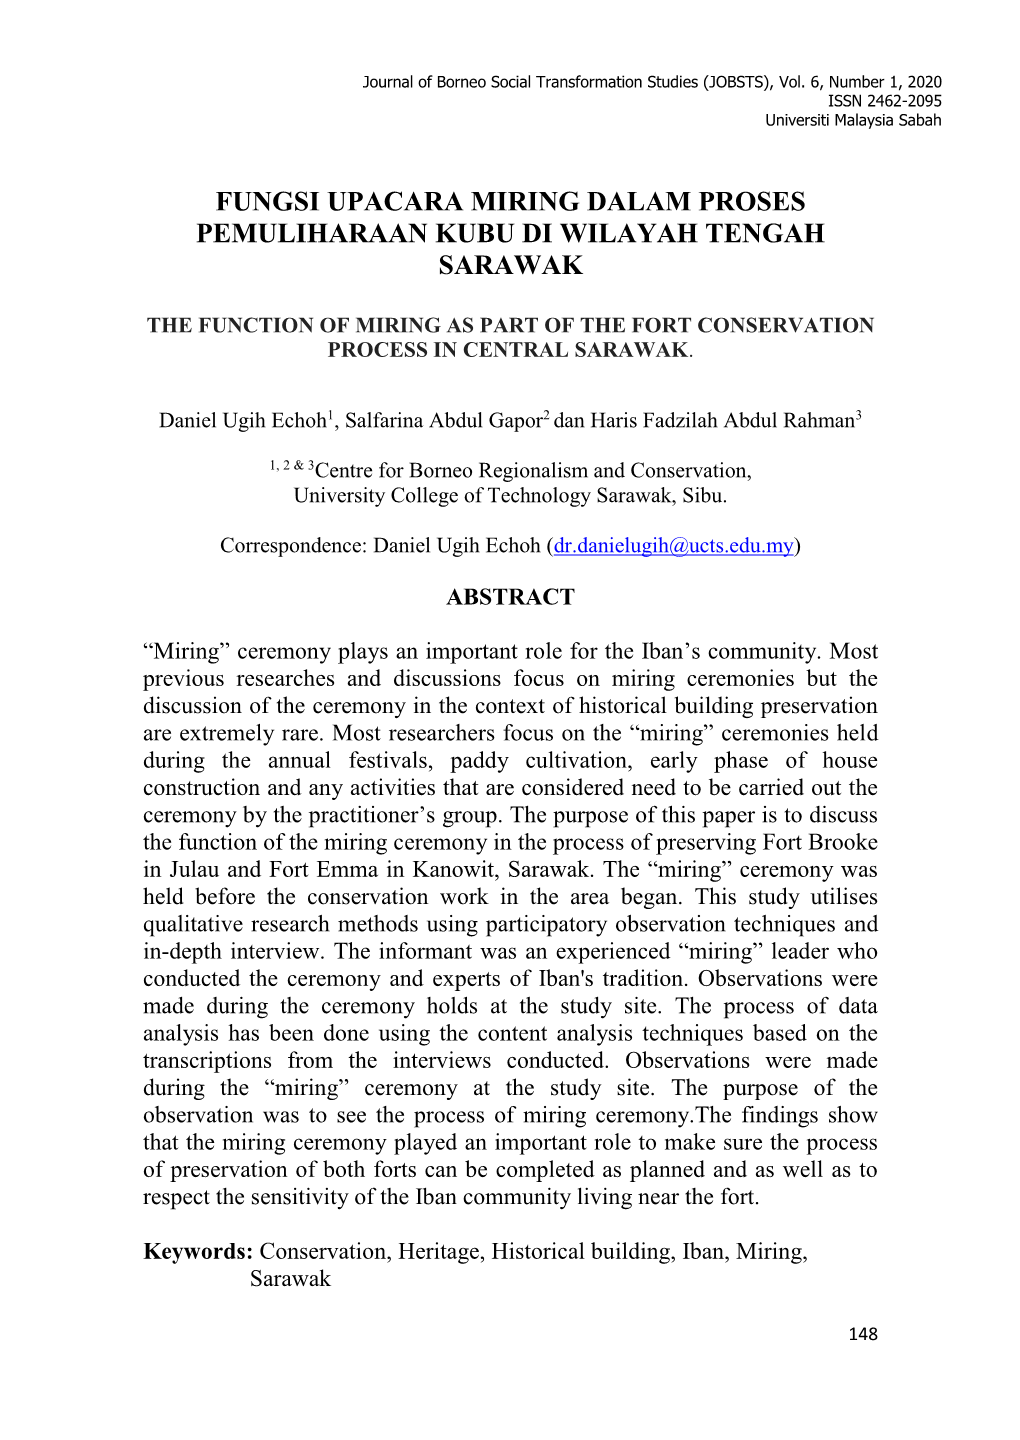 Fungsi Upacara Miring Dalam Proses Pemuliharaan Kubu Di Wilayah Tengah Sarawak